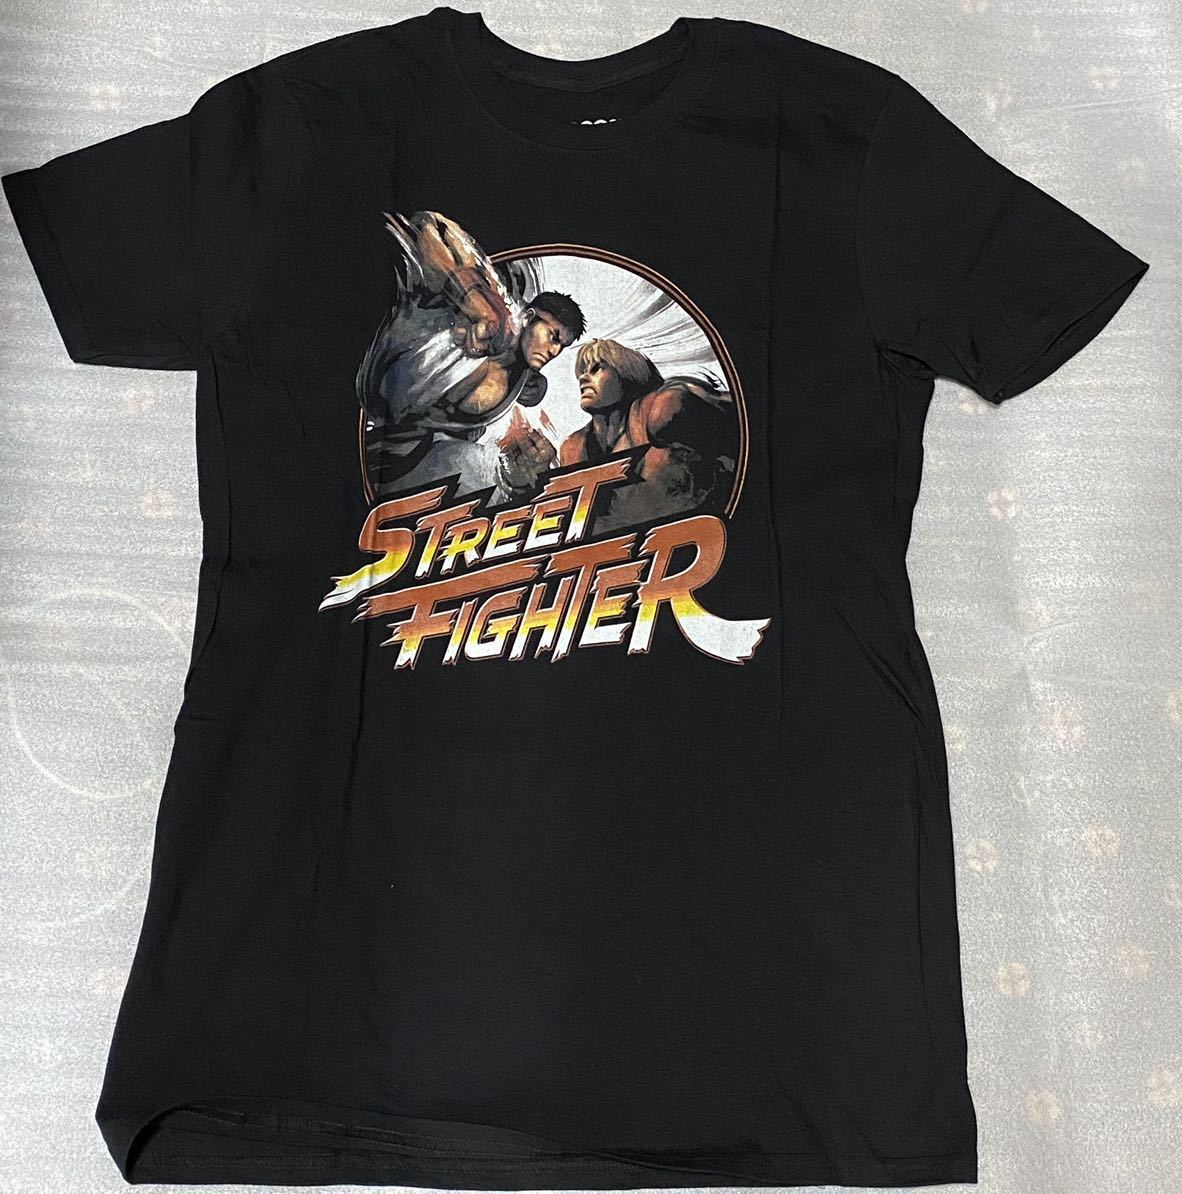 CAPCOM STREET FIGHTER Street Fighter T-shirt M size black black Logo Mexico made rare 